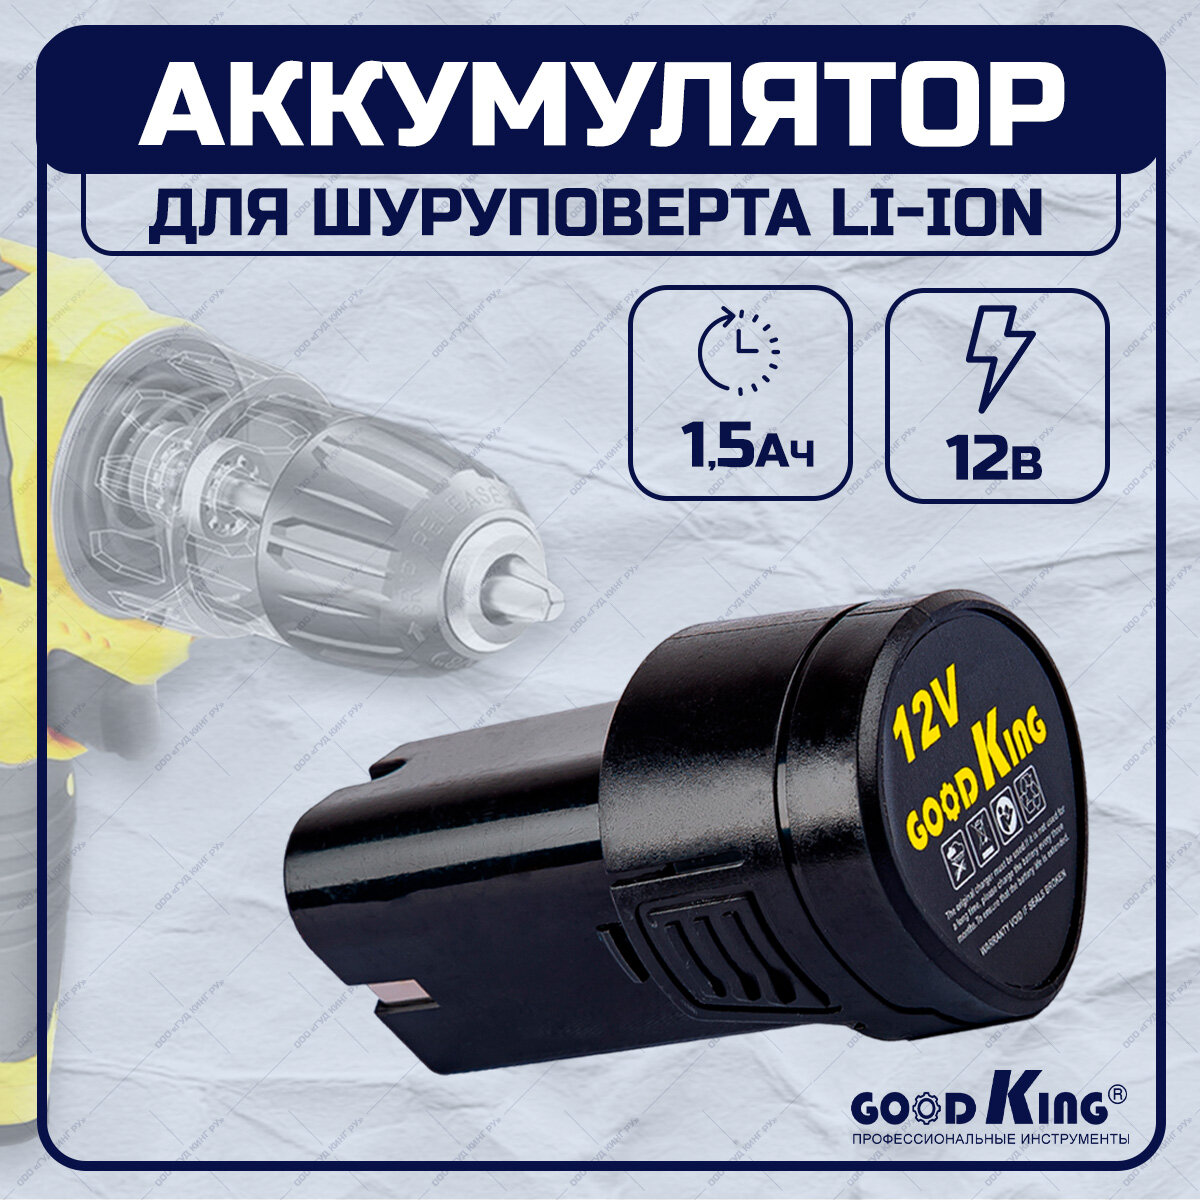 Аккумулятор для шуруповерта GOODKING EC-1201 1.5 А*ч 12В (Подходит для: YL-120113 YL-101202 YL-101201 GKRK52-120228 GKREC-1202092 и т. д)